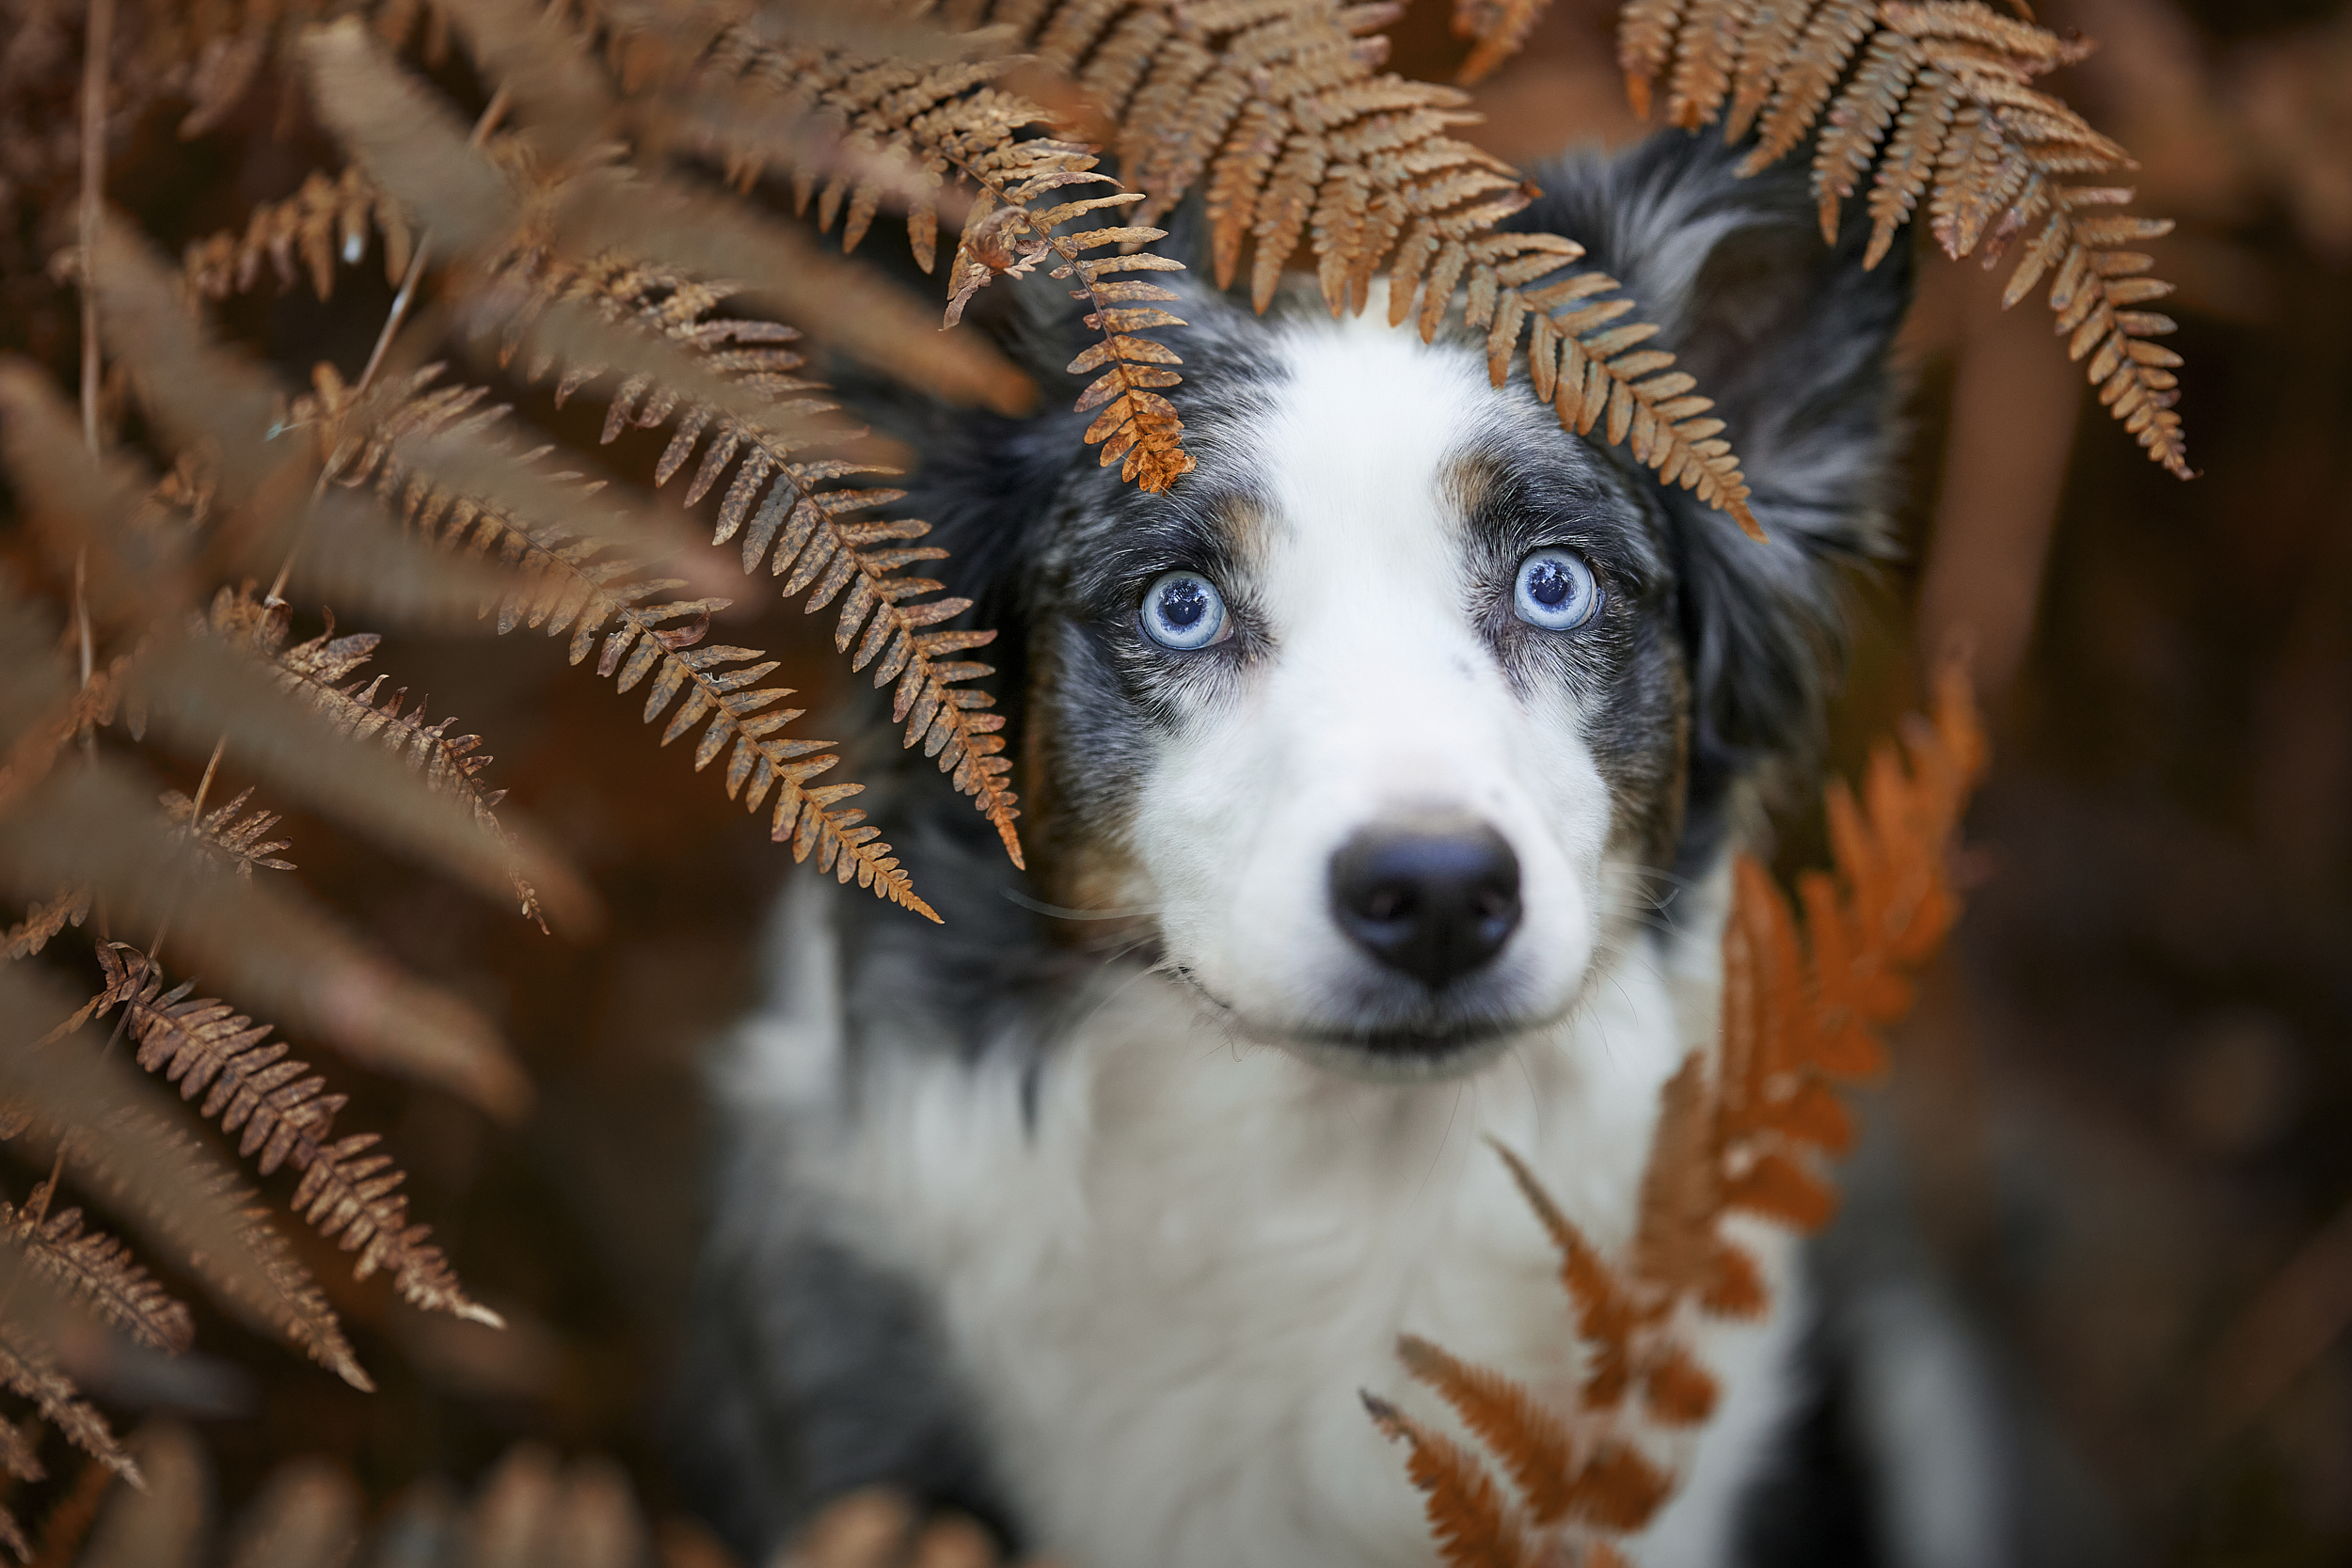 intense blue eyes contrast with brown furn leaves